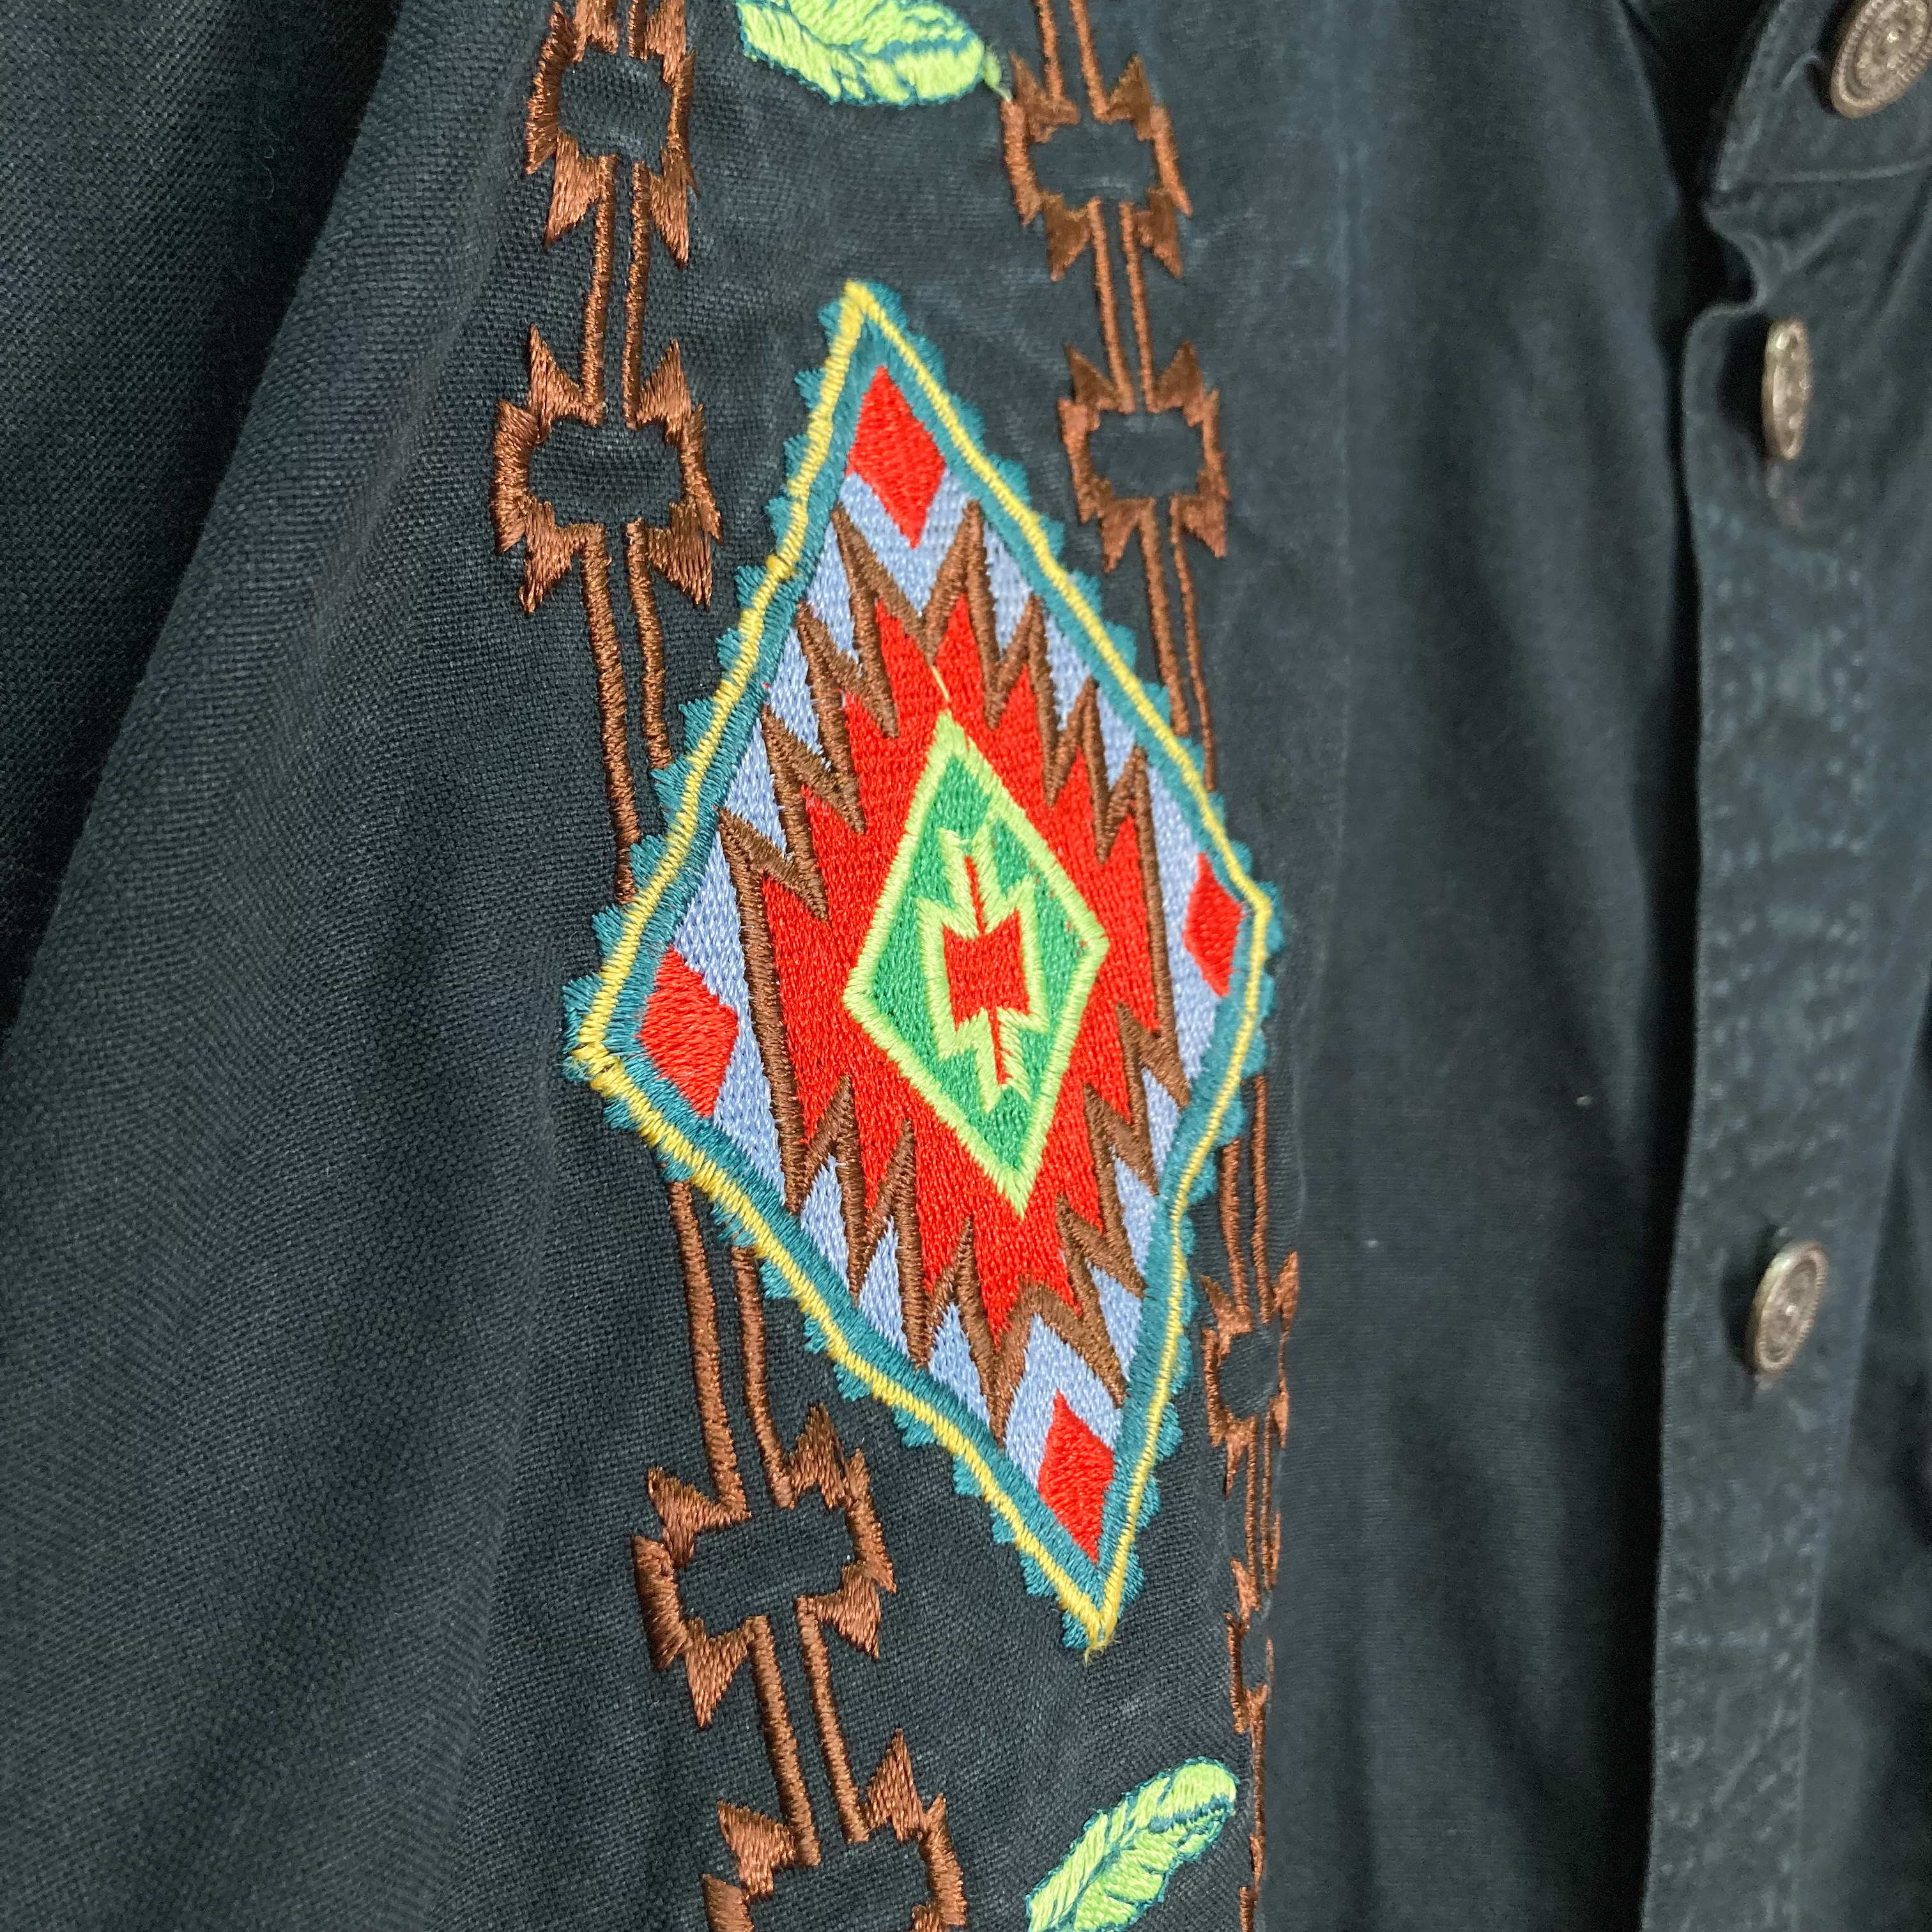 90s L/S embroidered design shirt jacket